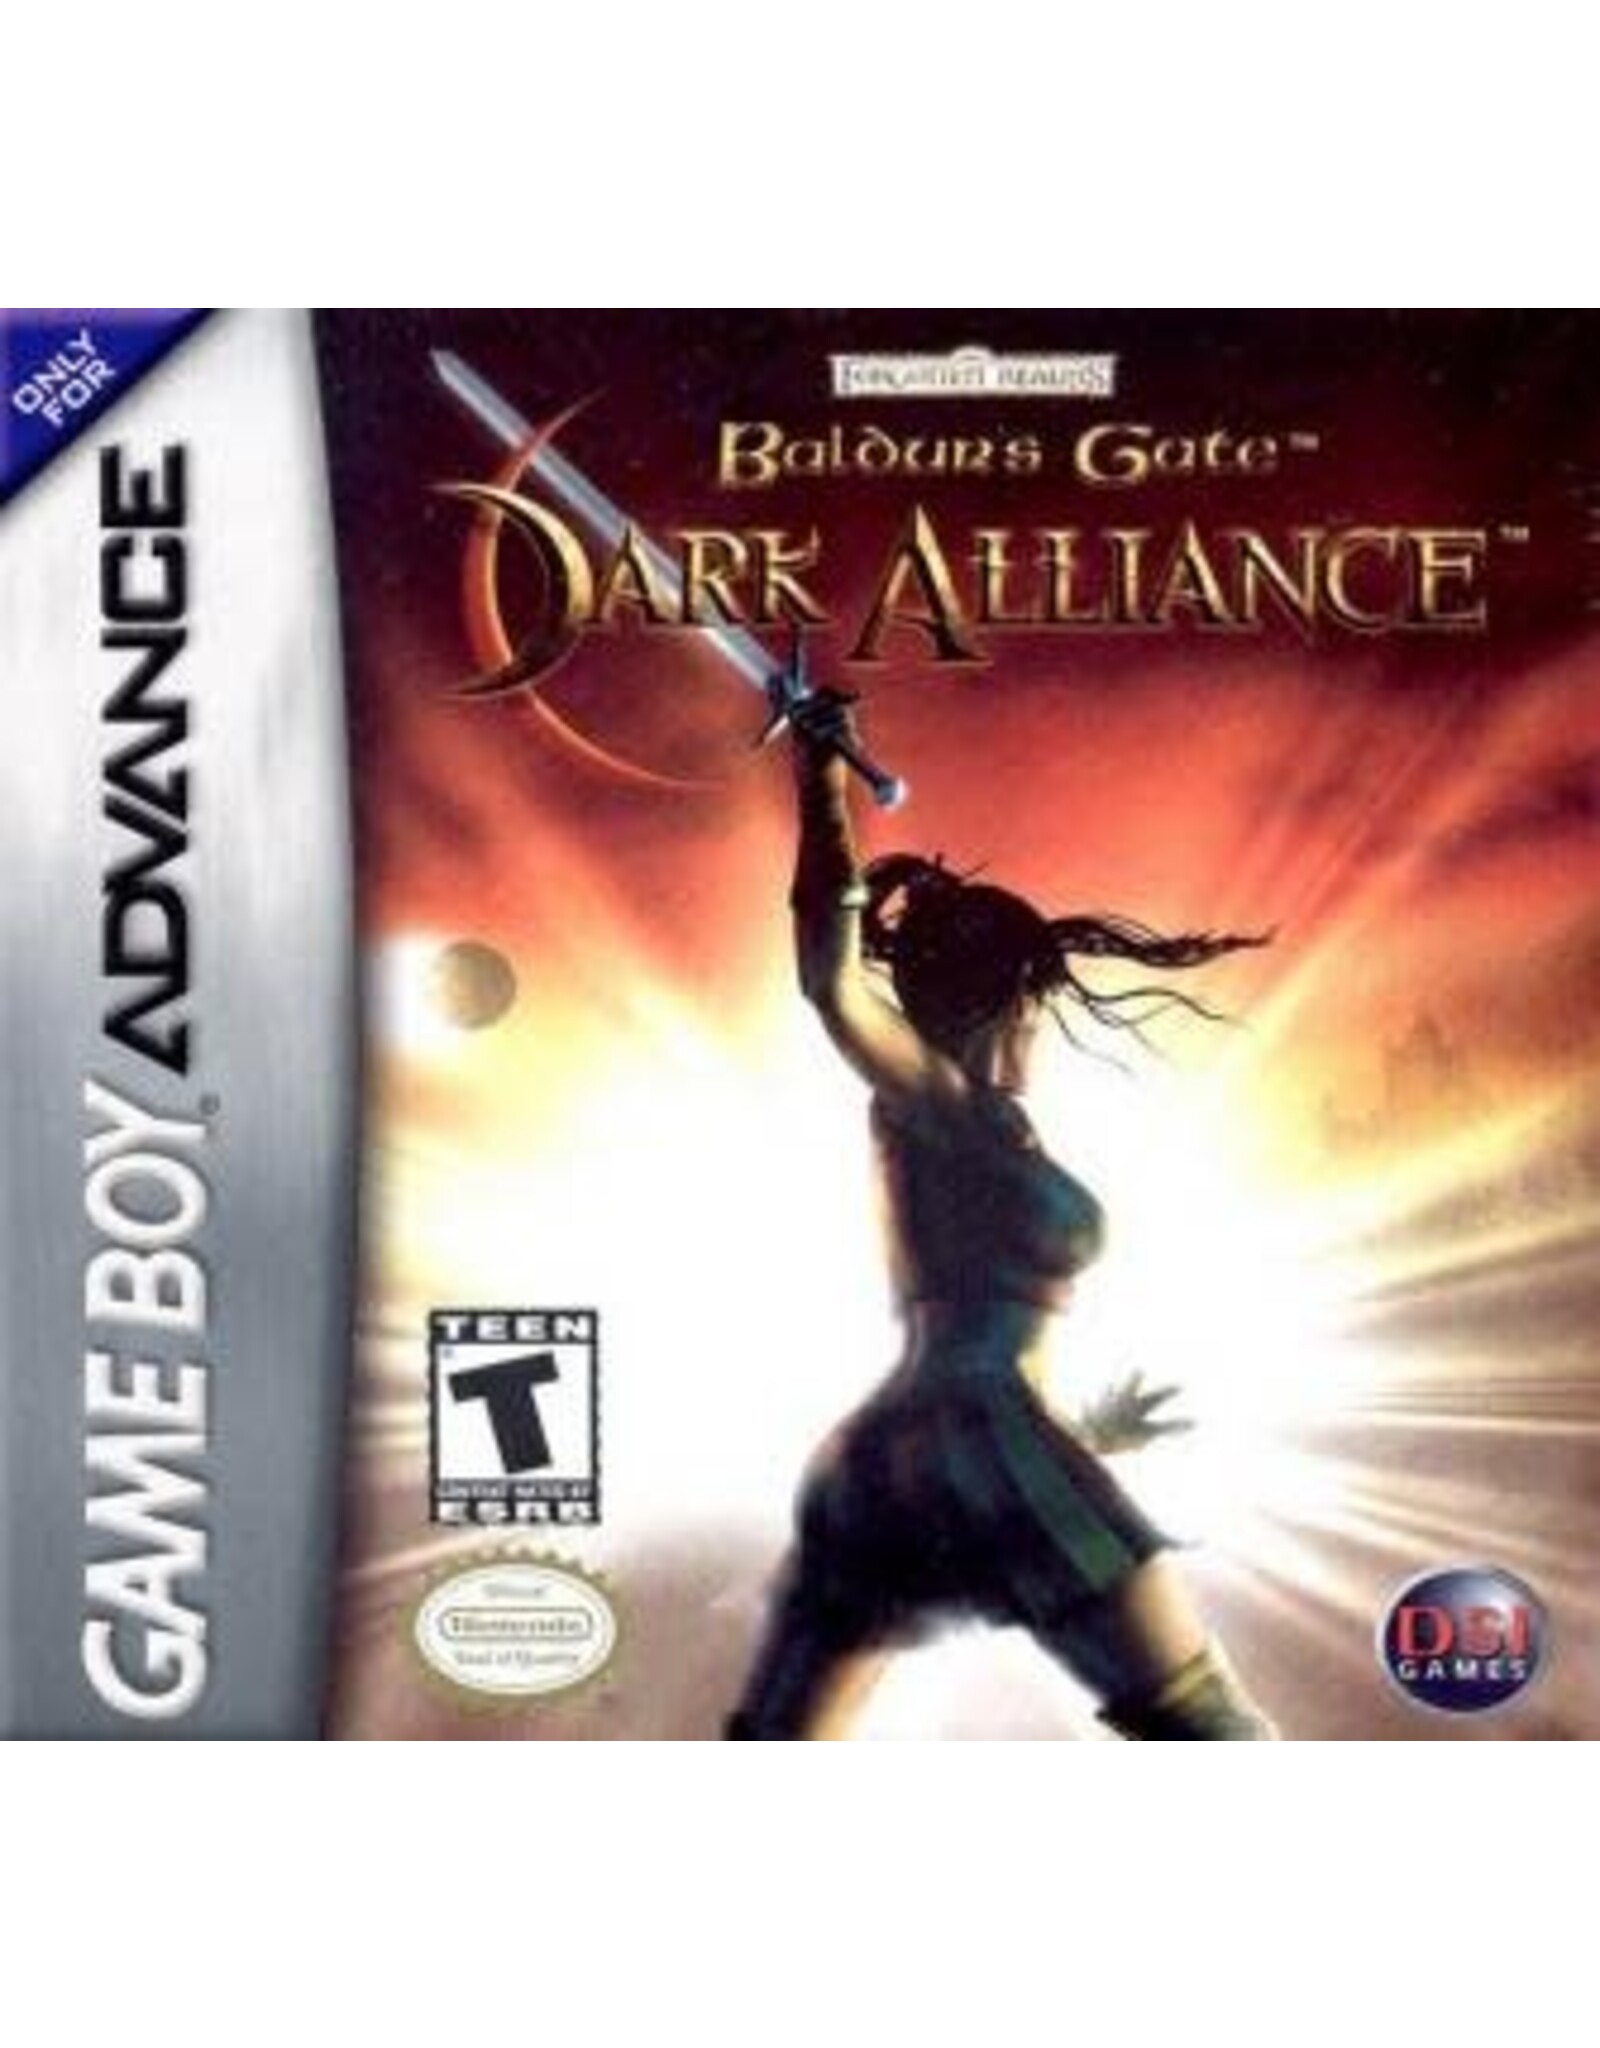 Game Boy Advance Baldur's Gate Dark Alliance (Cart Only)